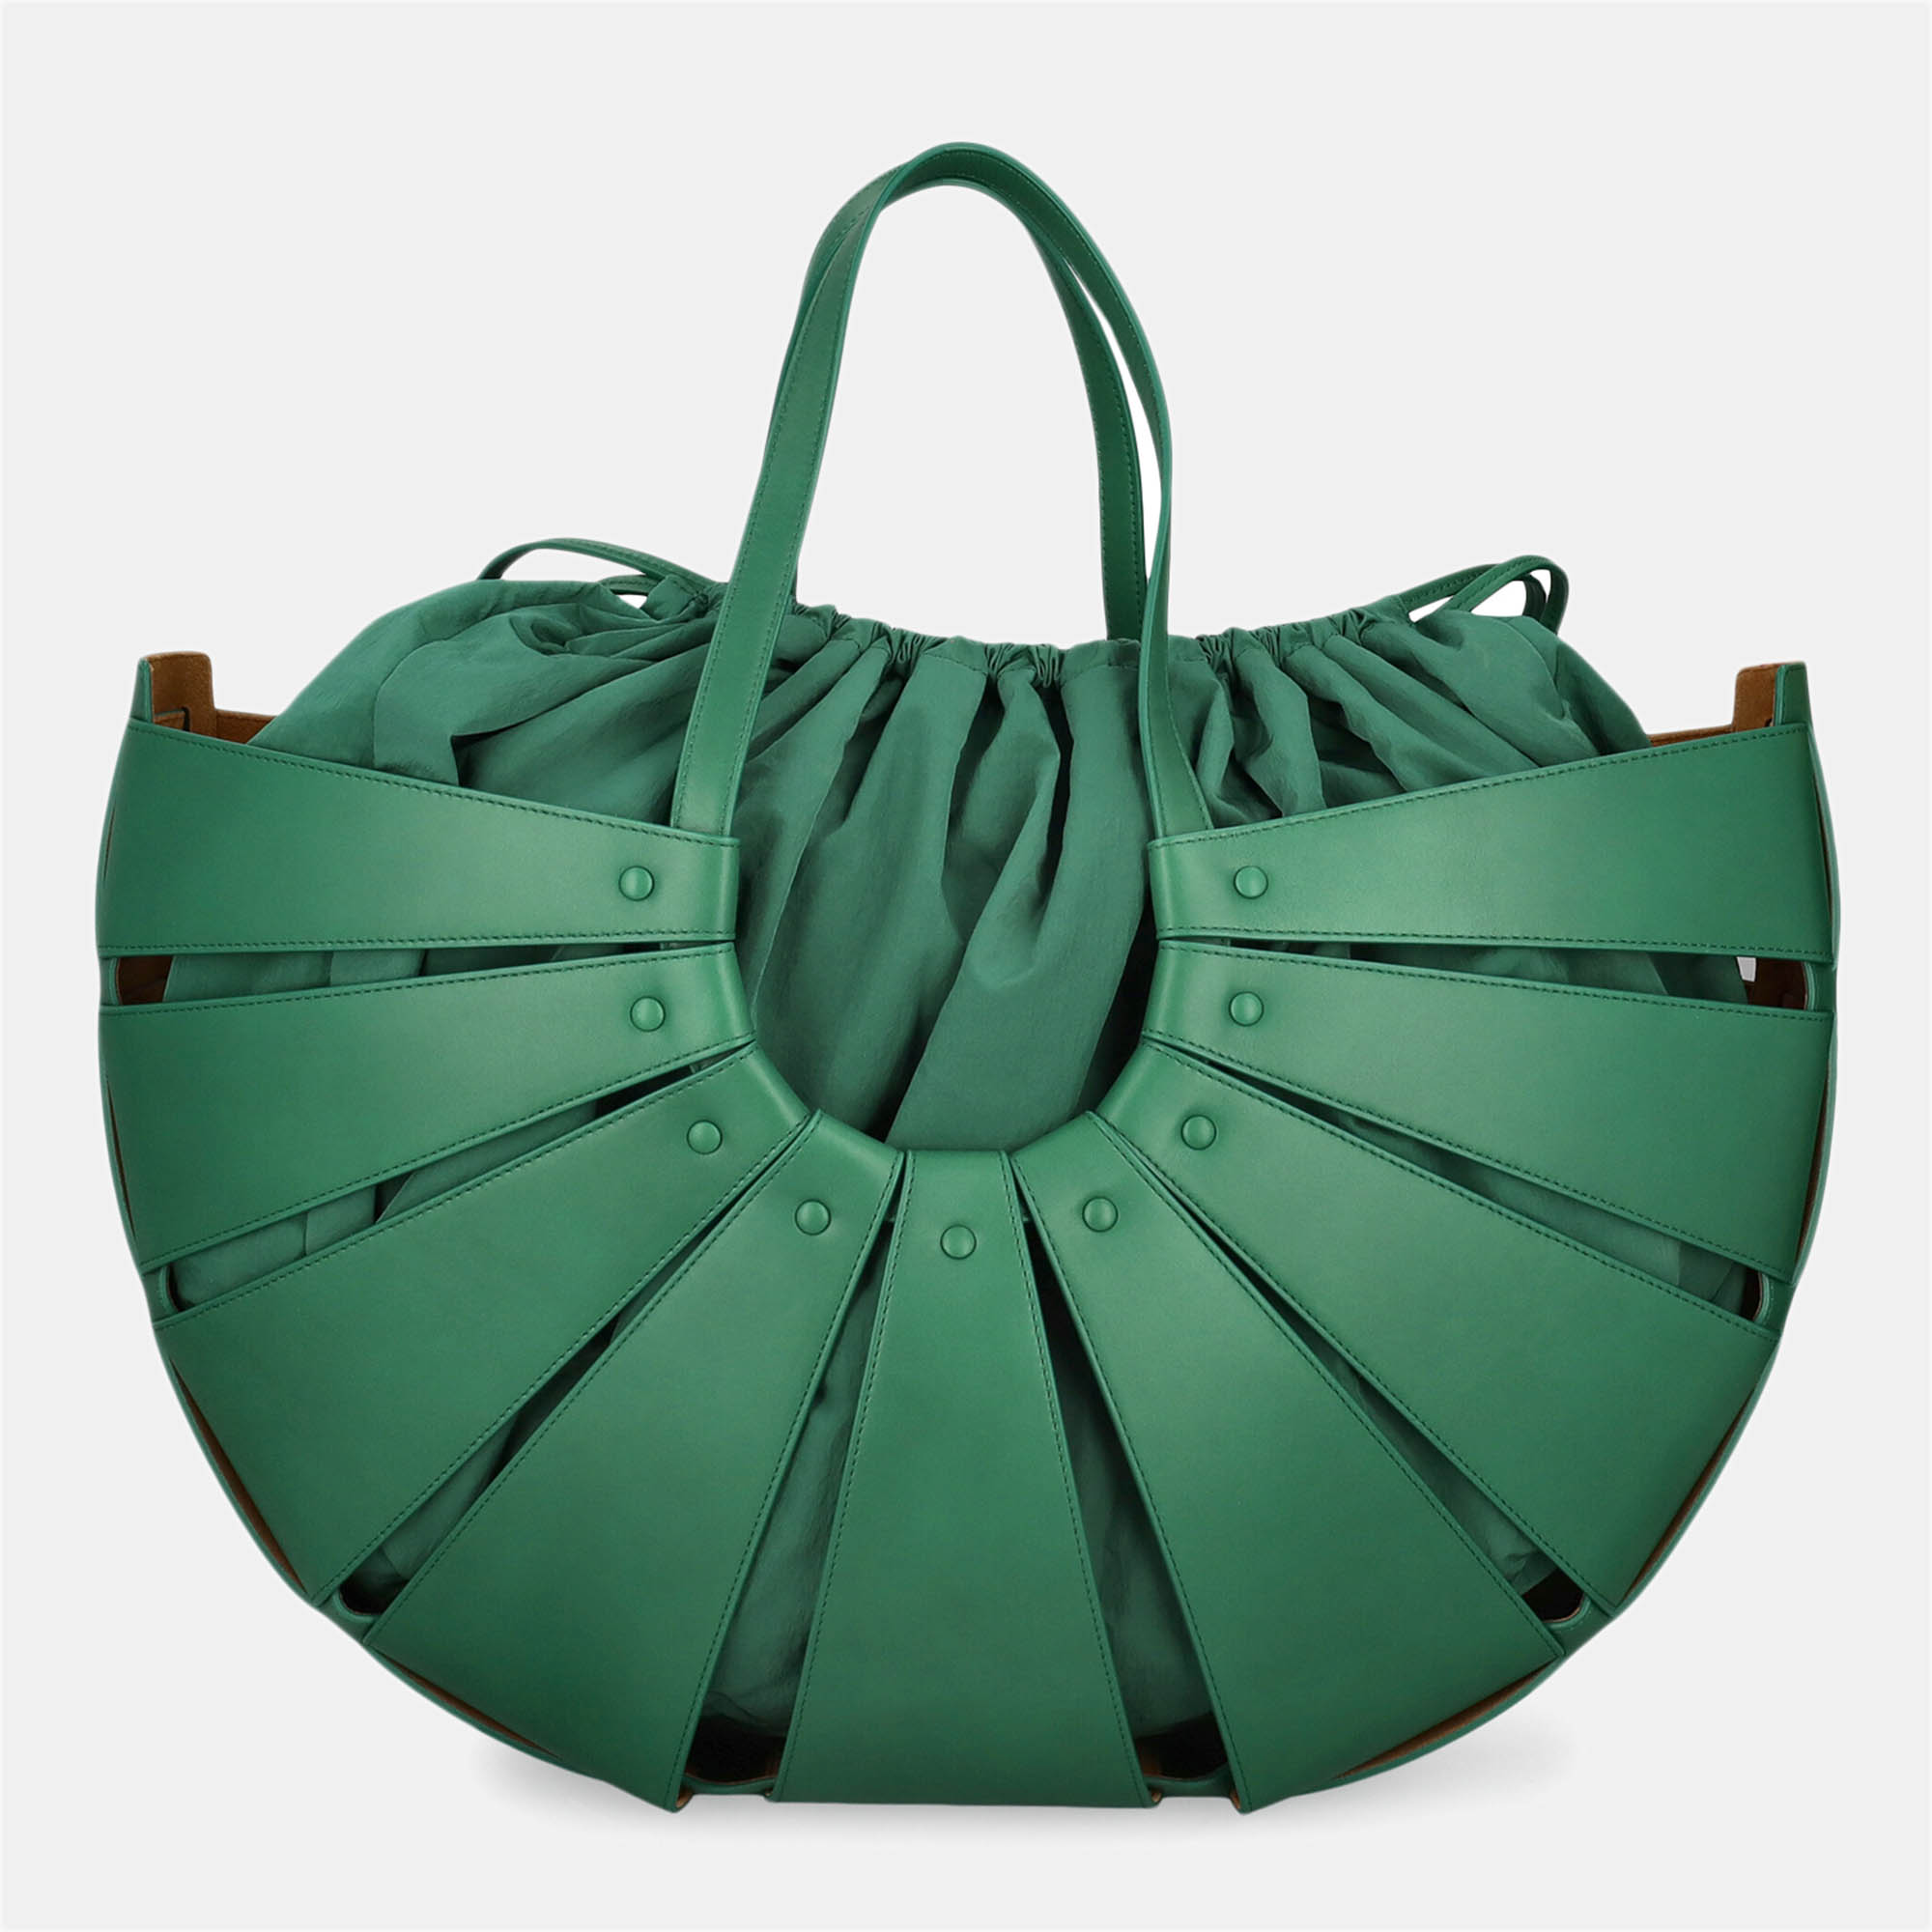 Bottega Veneta Women's Leather Tote Bag - Green - One Size